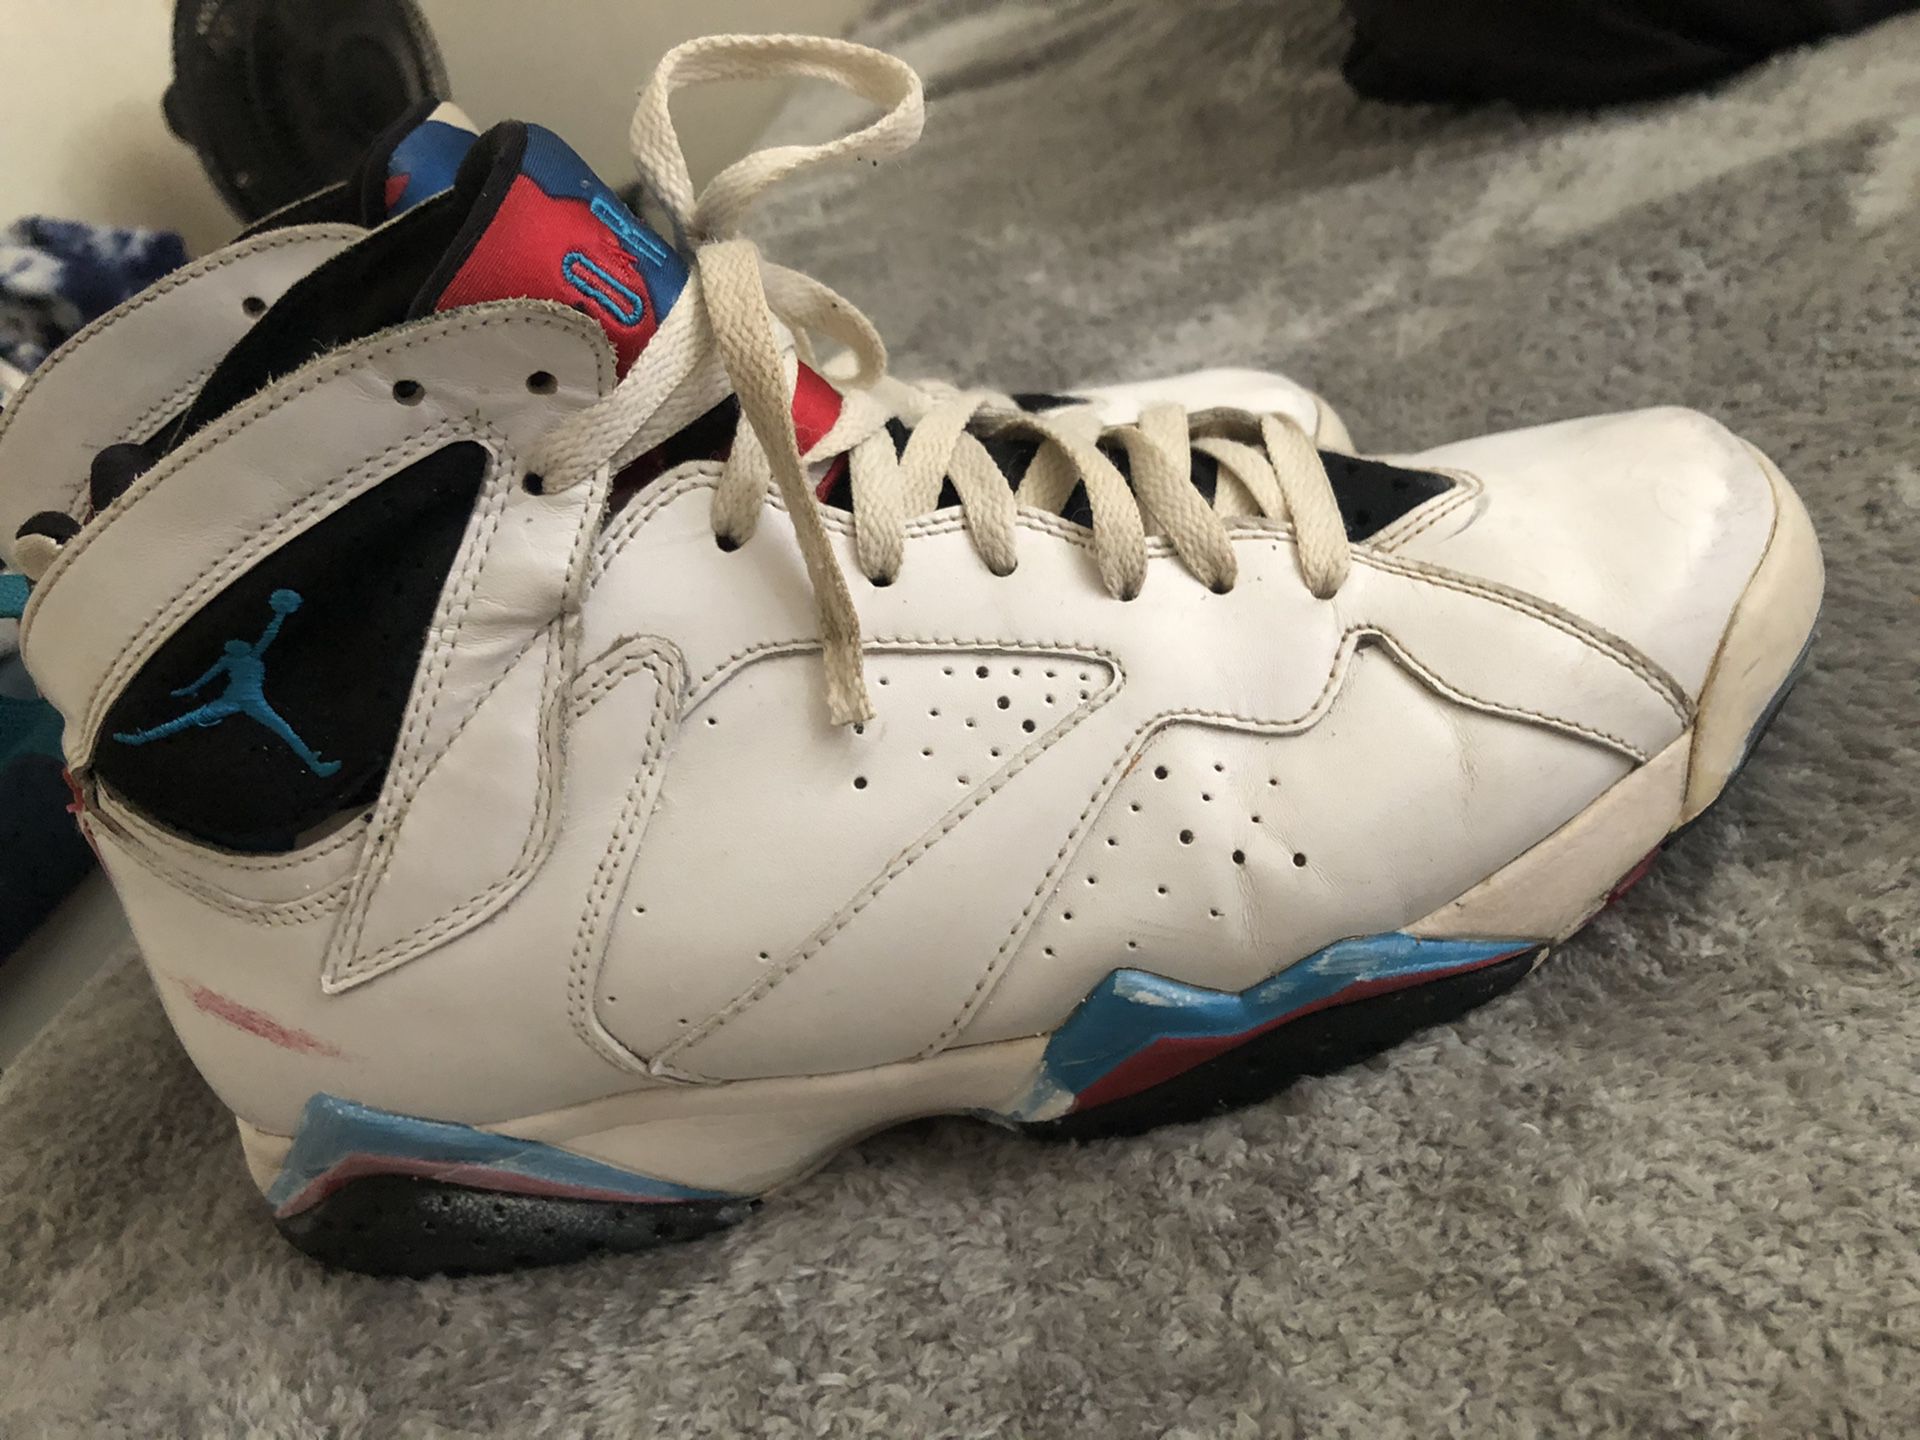 Jordans & Adidas